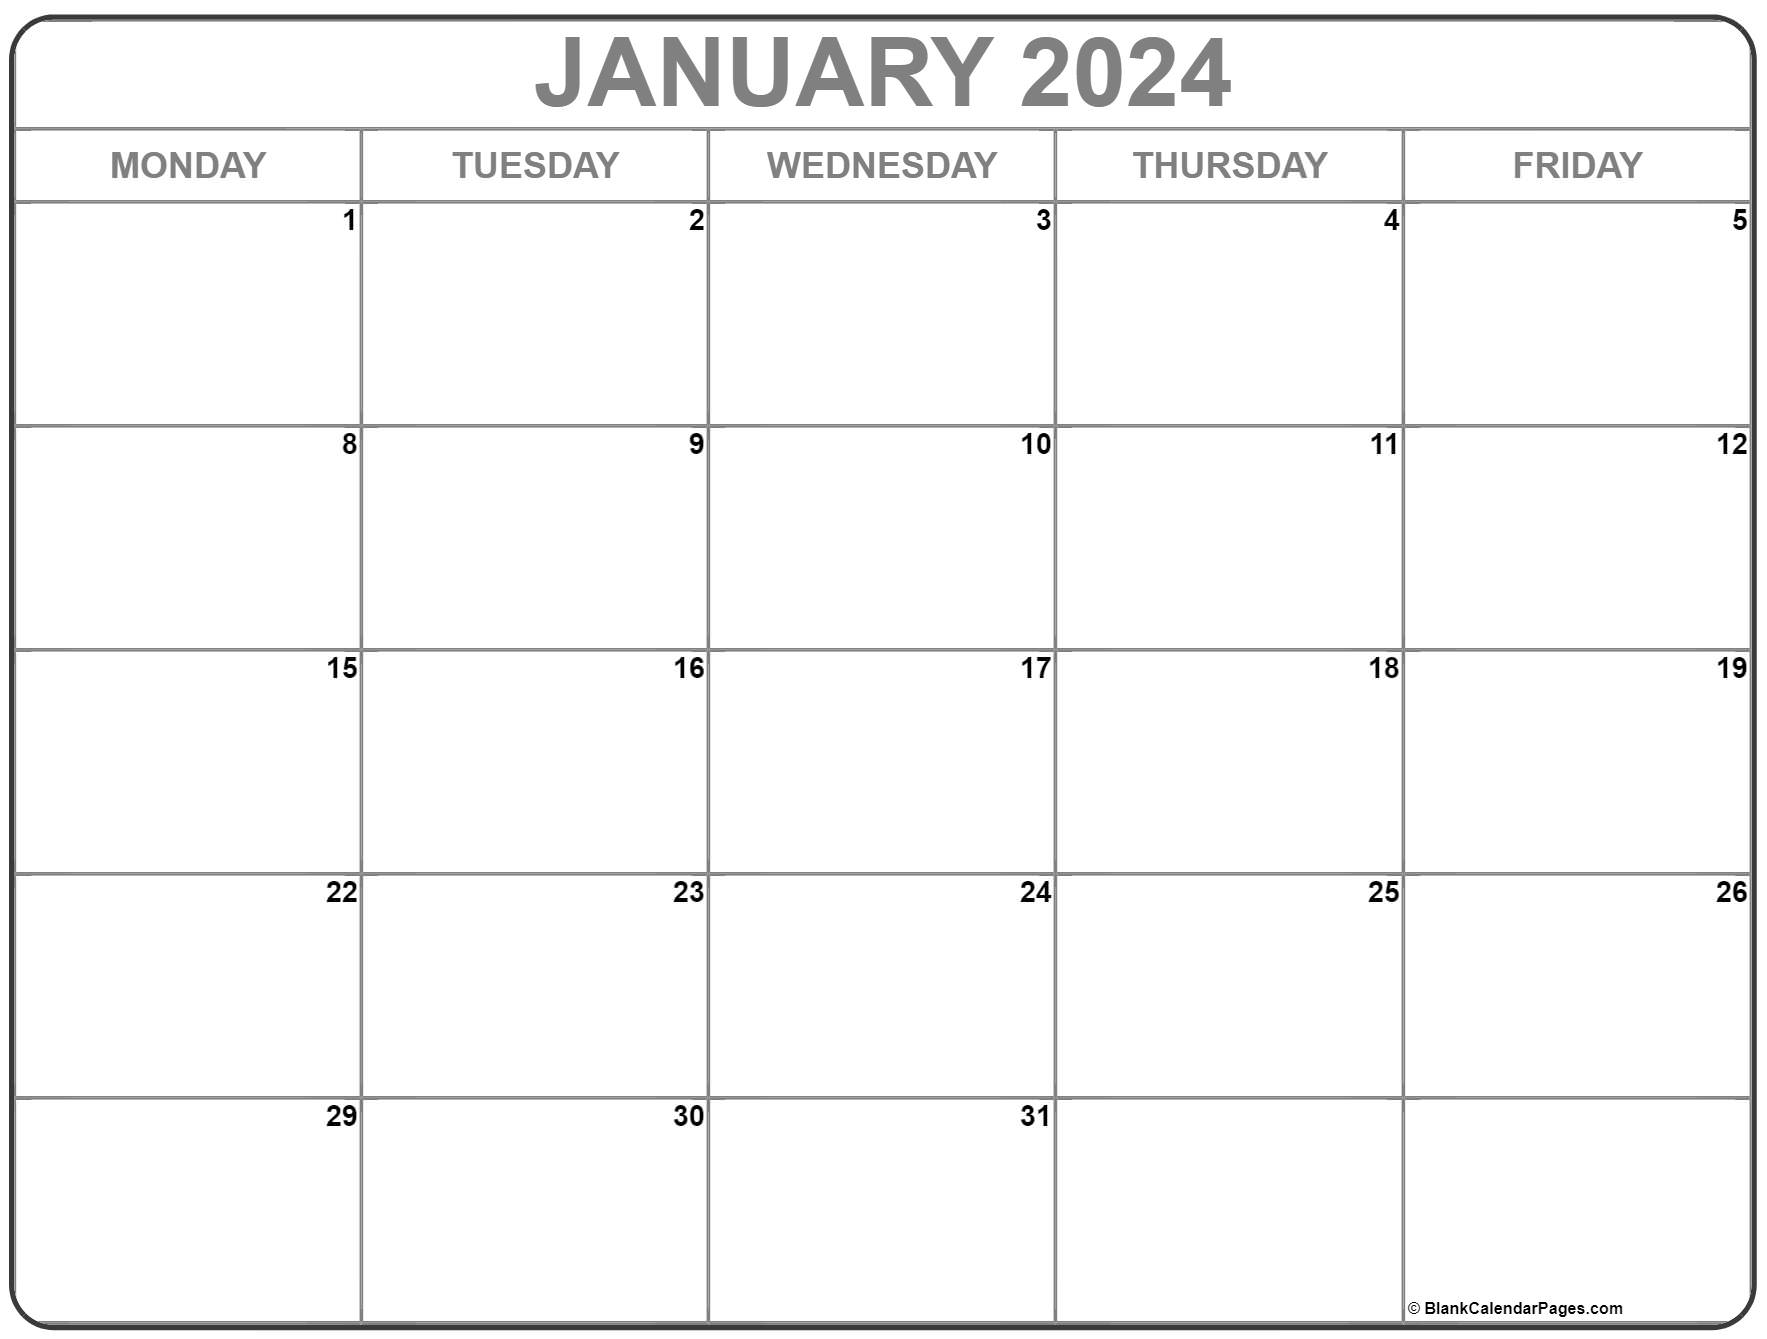 January 2024 Monday Calendar | Monday to Sunday